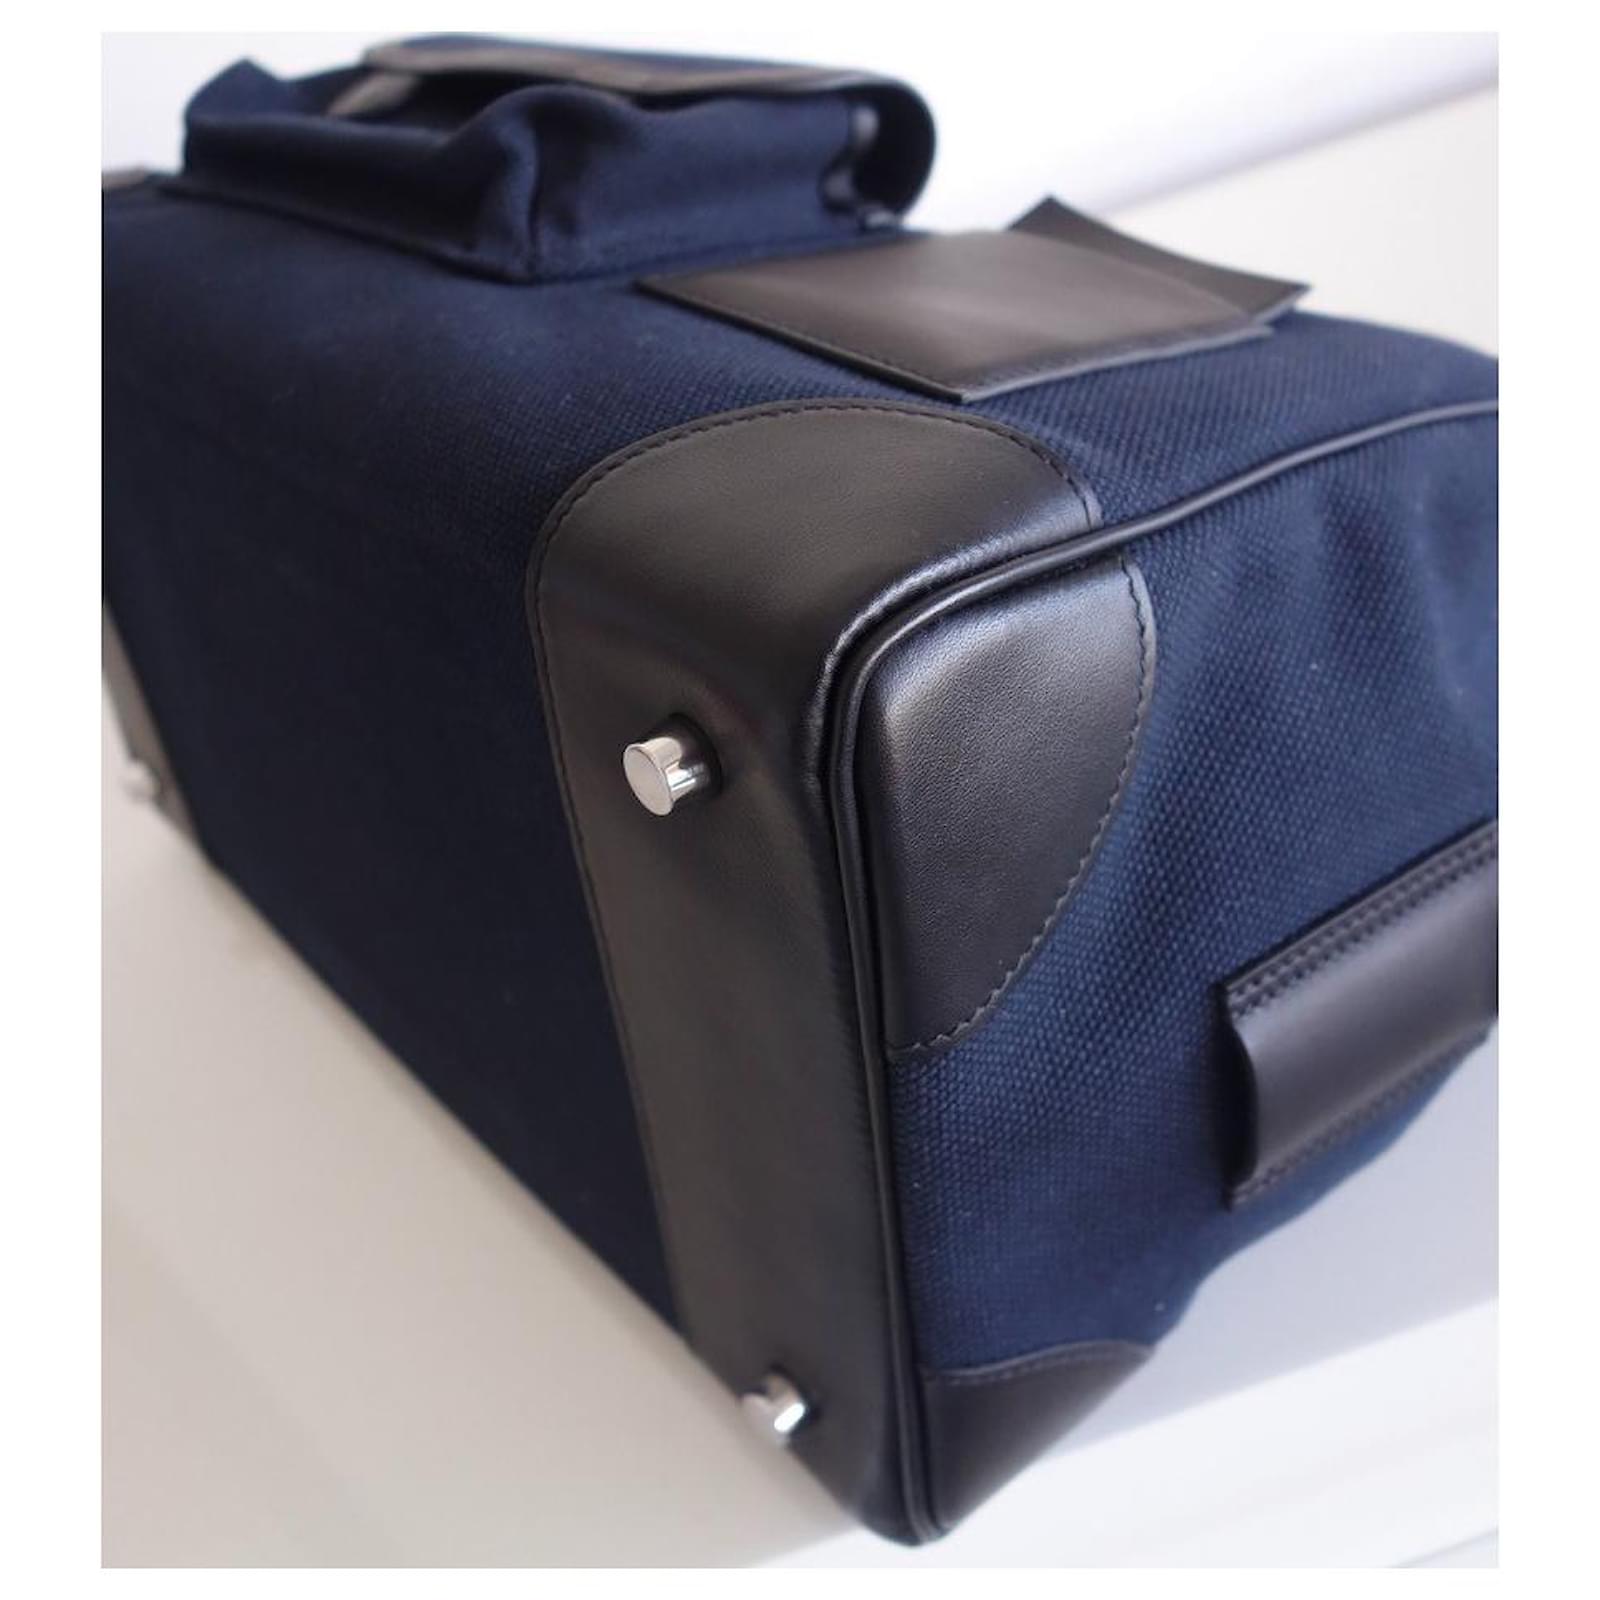 Hermès HERMES BIRKIN BAG 35 Cargo Black Navy blue Leather Cloth